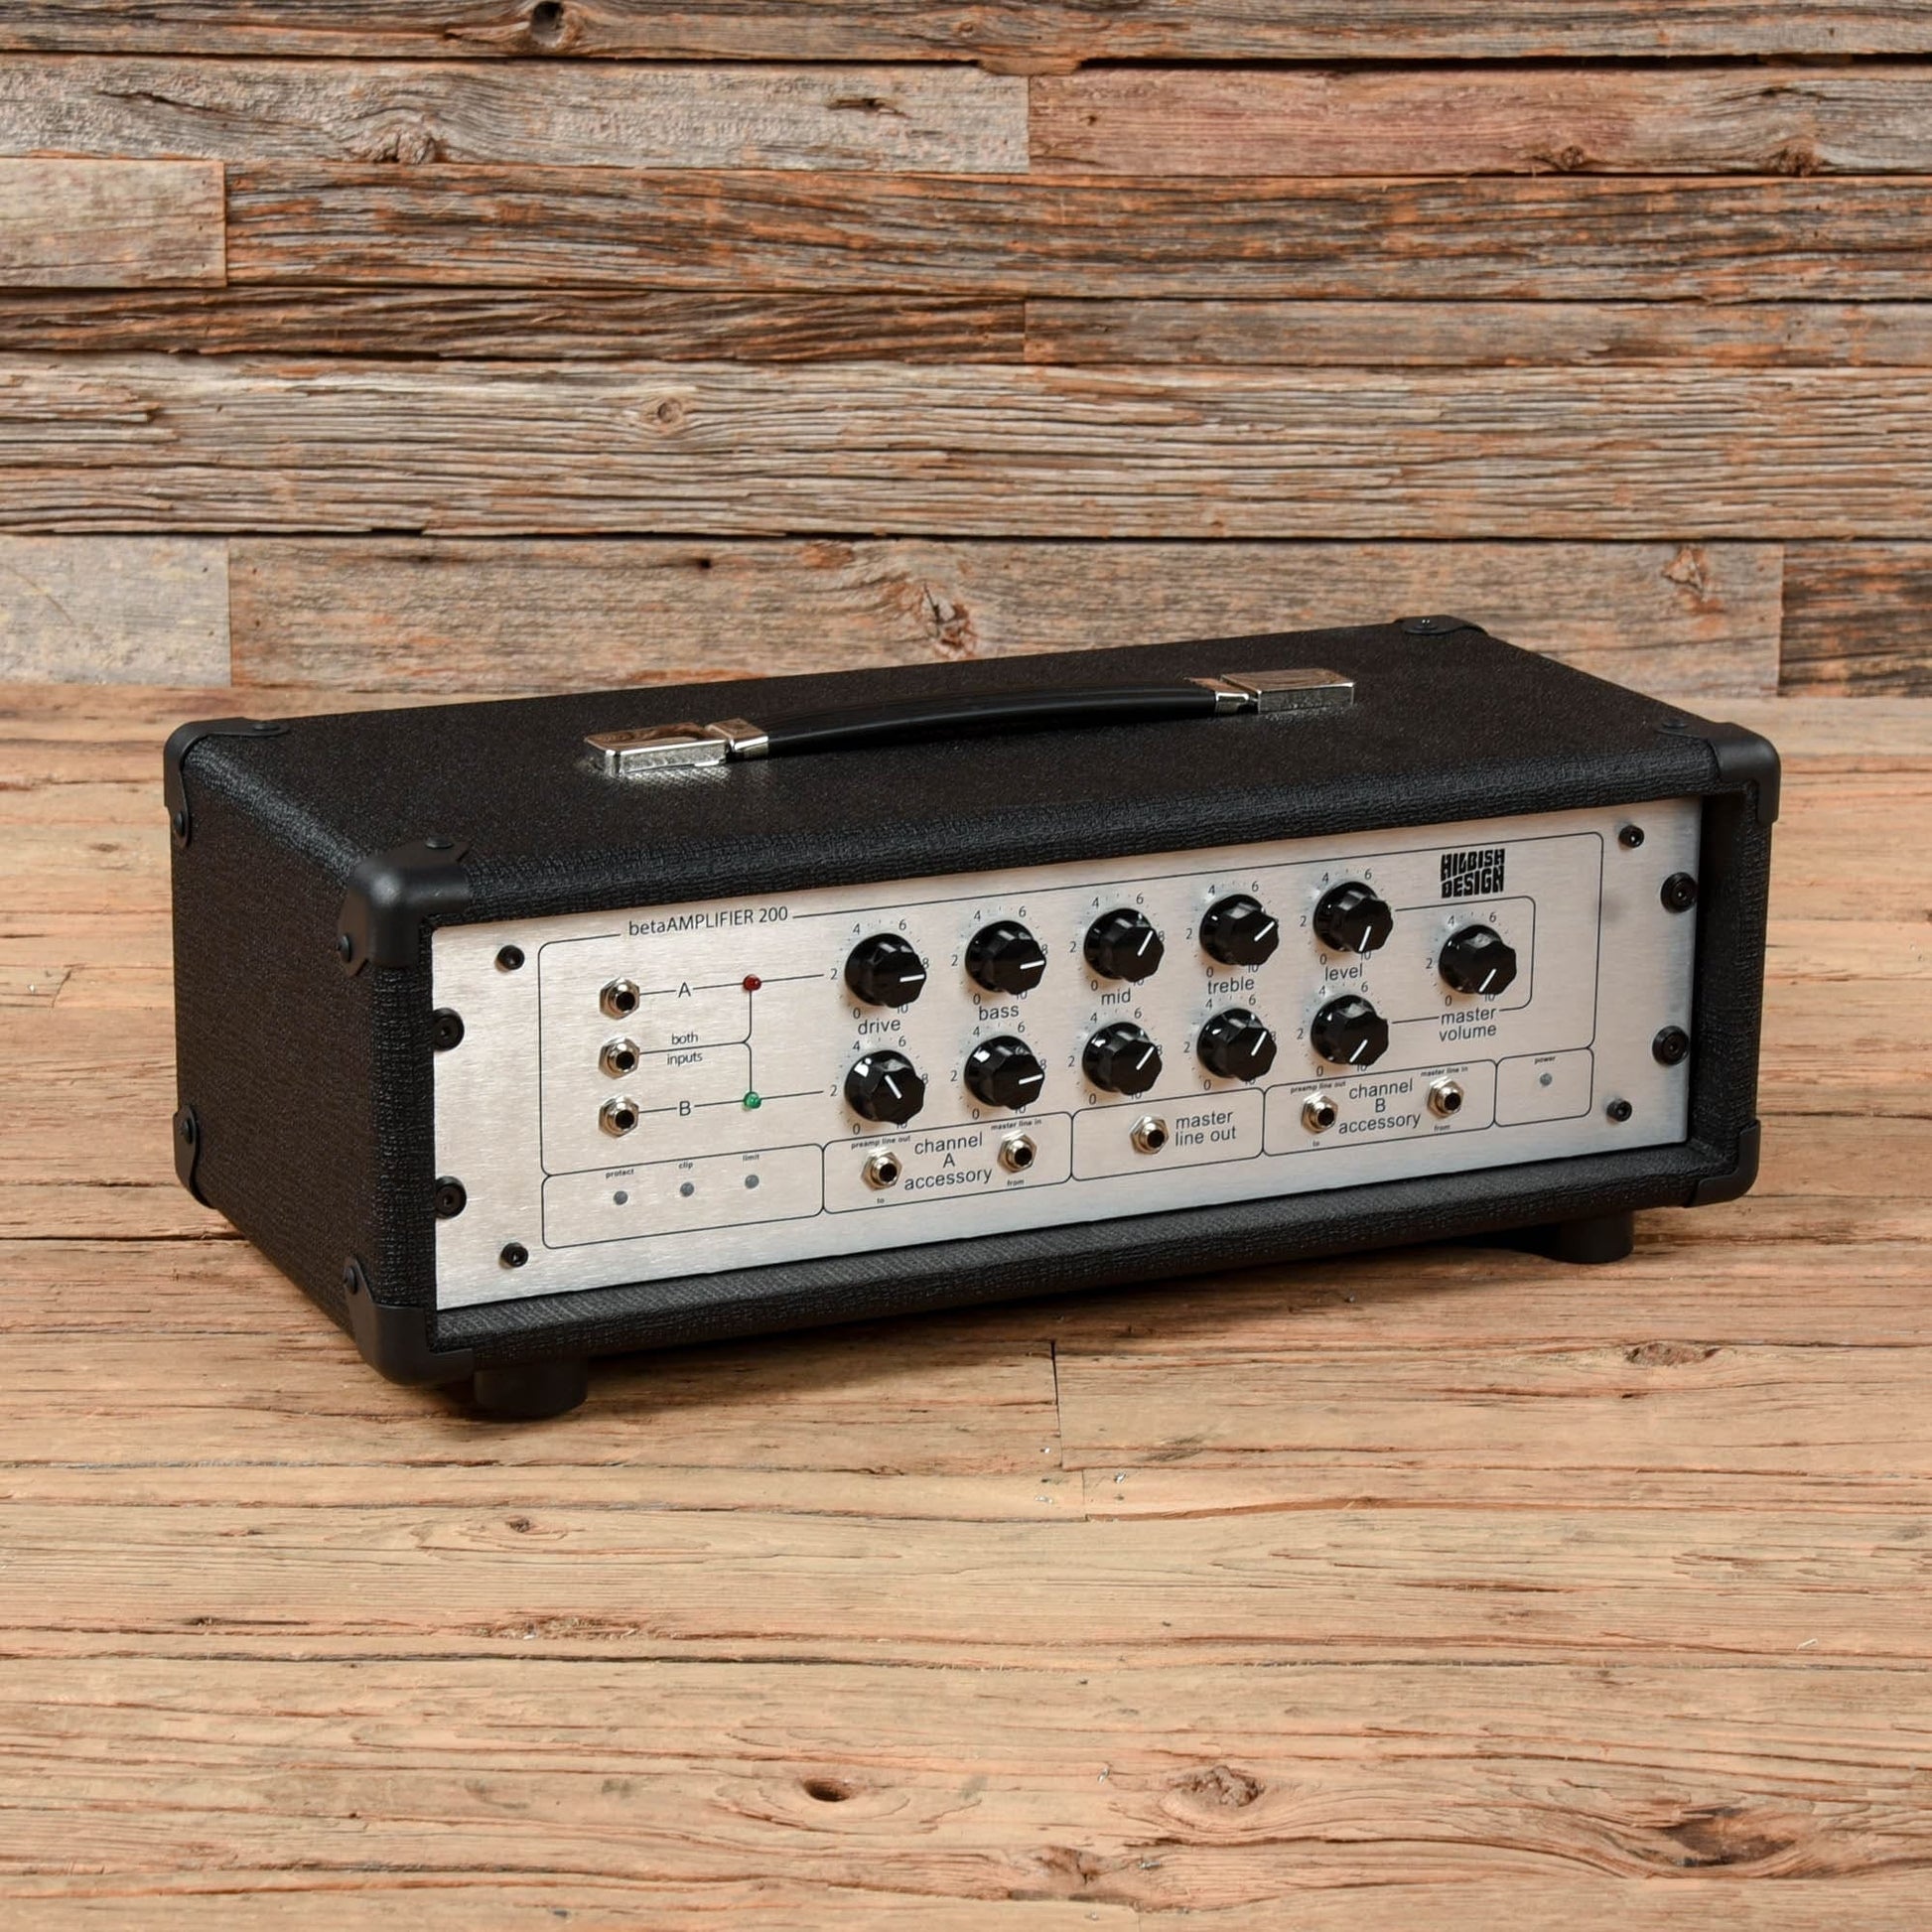 Hilbish Design betaAMPLIFIER 200 Amps / Guitar Cabinets